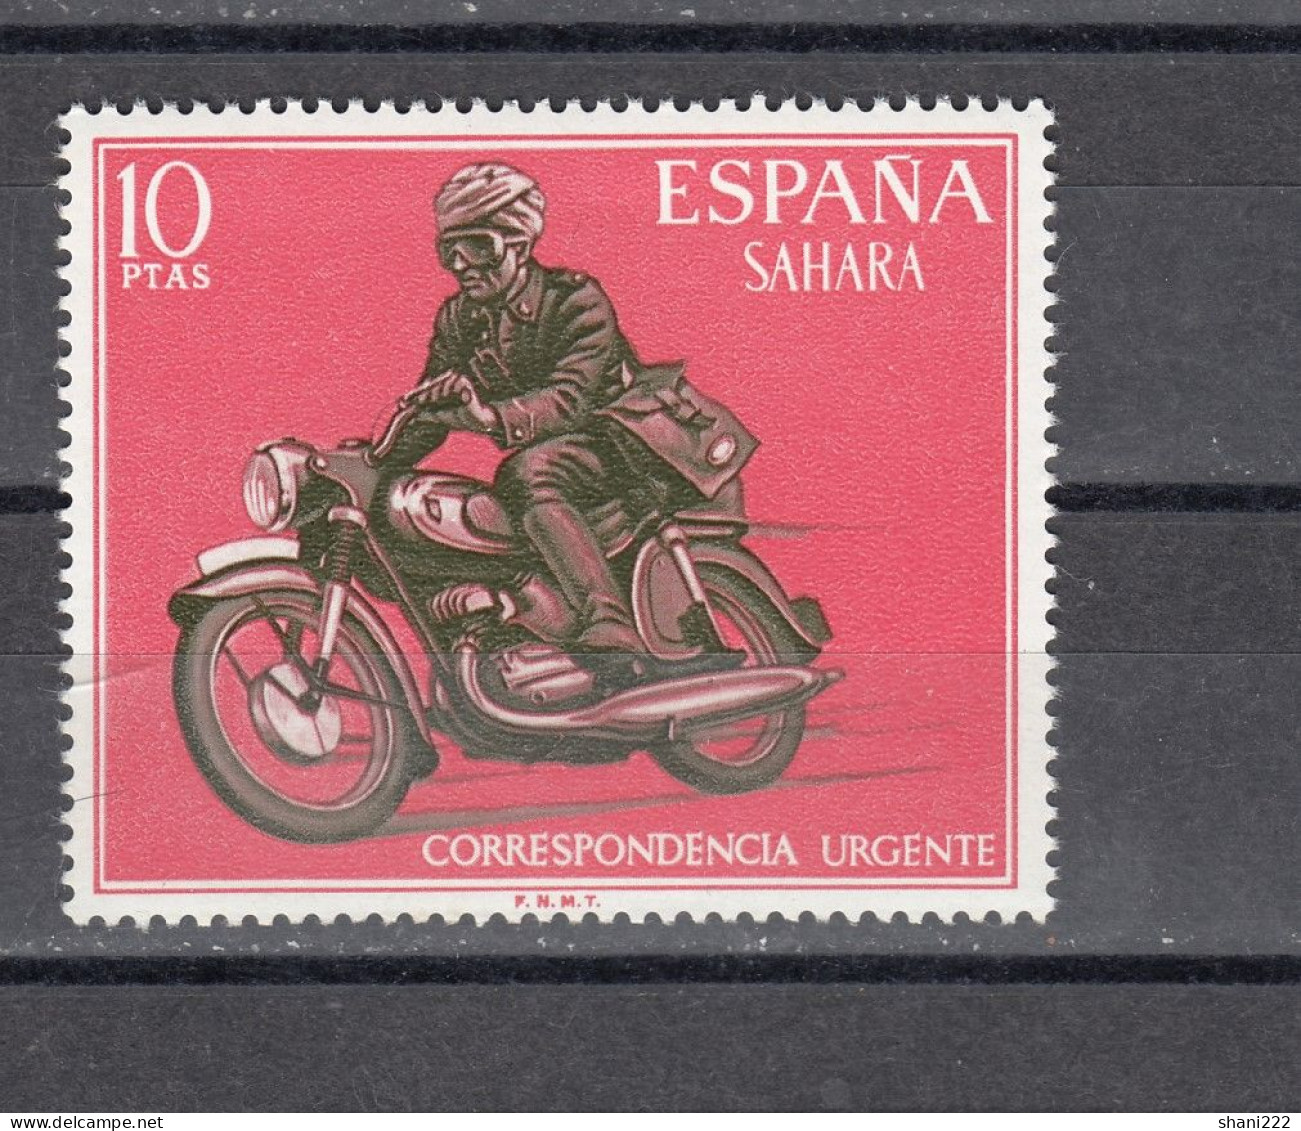 Spanish Sahara 1971 Express, Motorcycle - MNH   (e-868) - Spanish Sahara